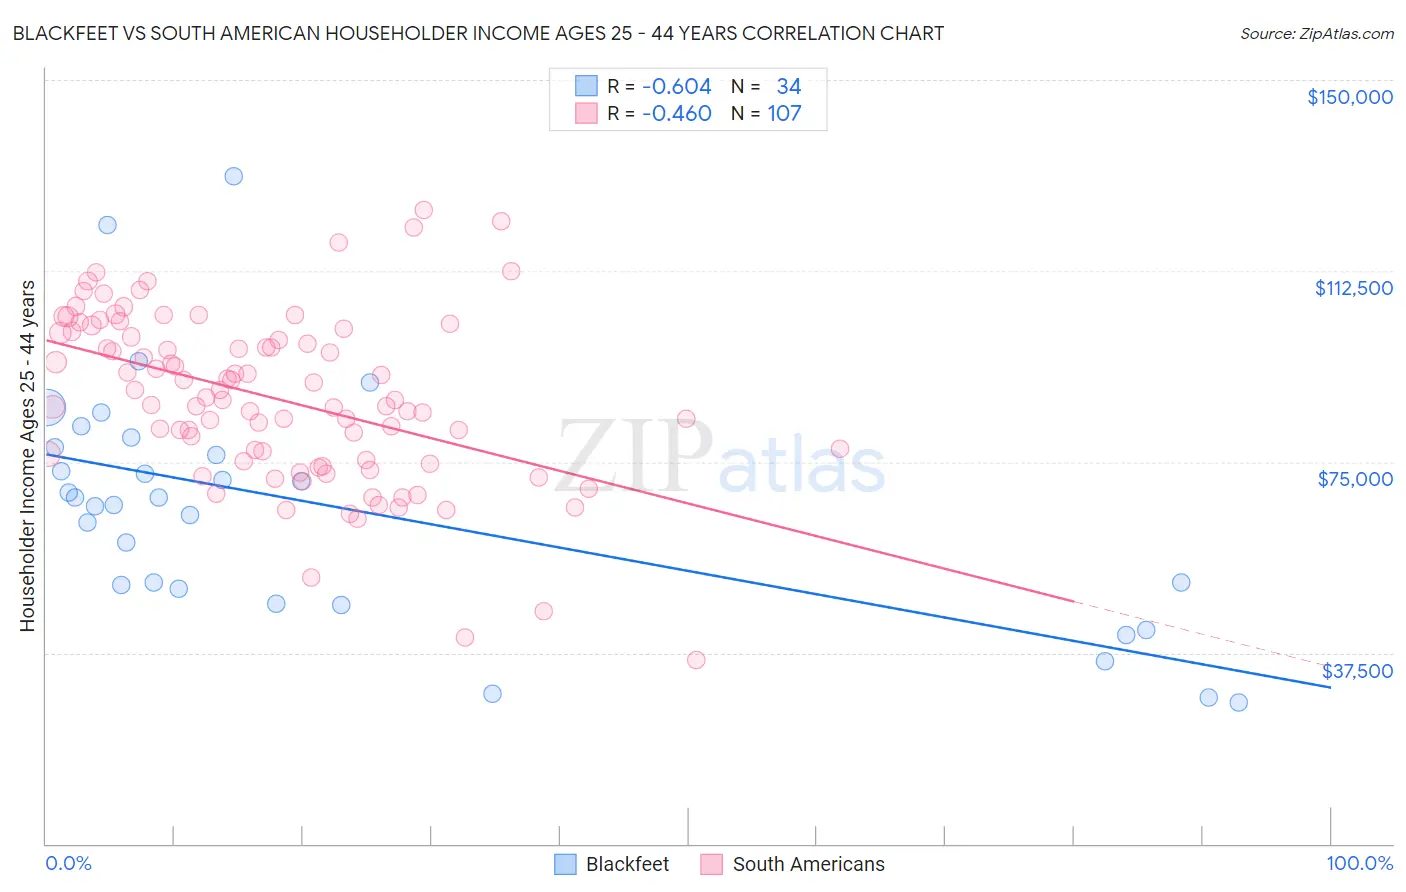 Blackfeet vs South American Householder Income Ages 25 - 44 years